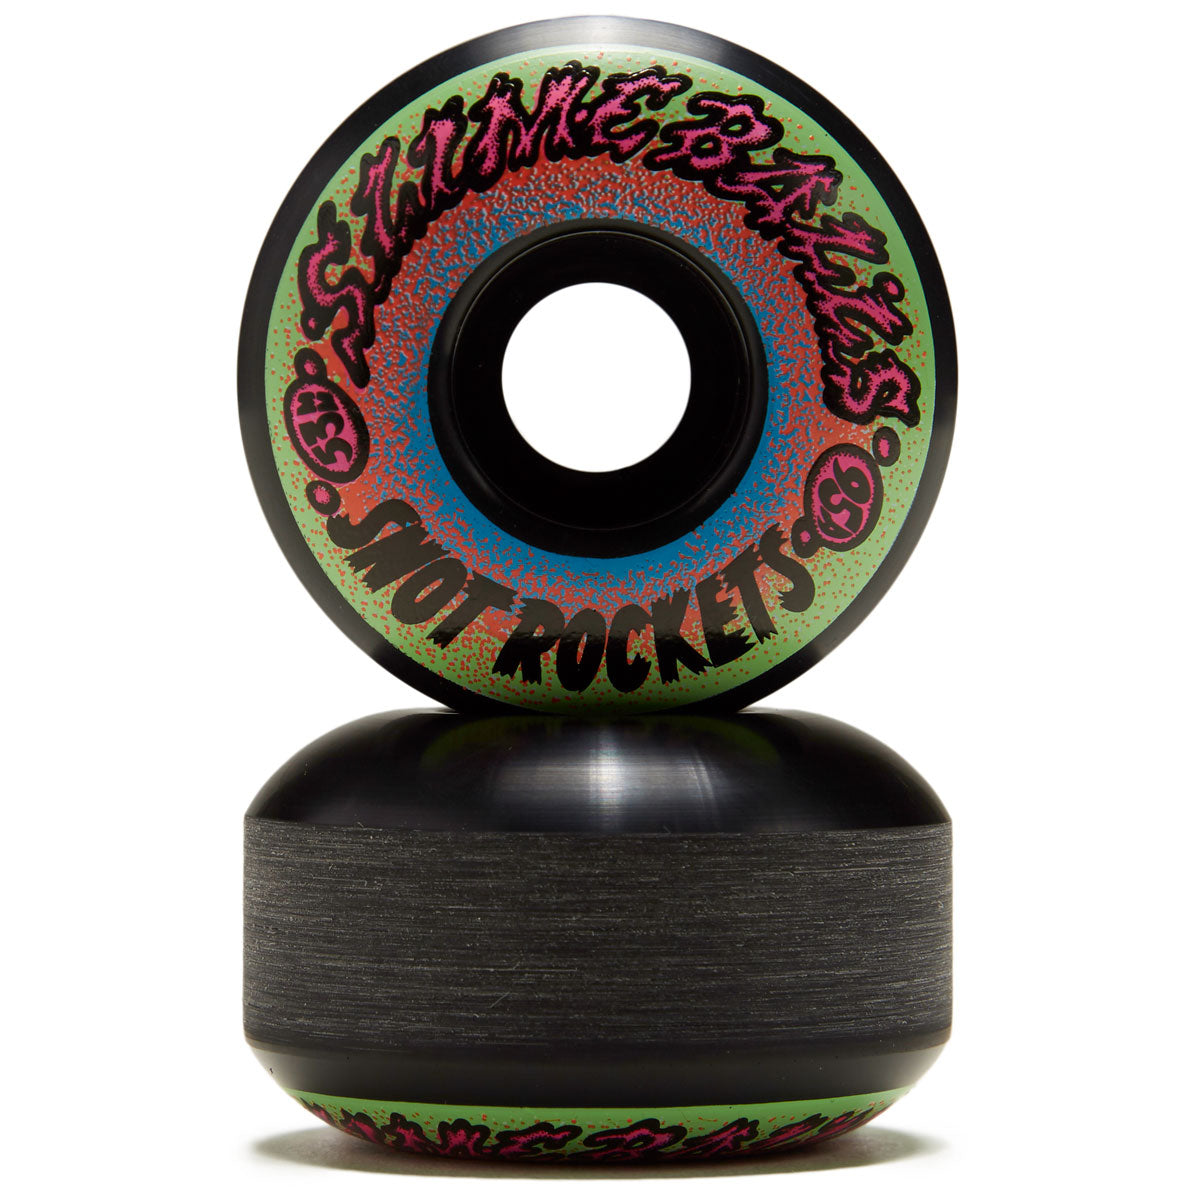 Slime Balls Snot Rockets 95a Skateboard Wheels - Yellow - 53mm image 2